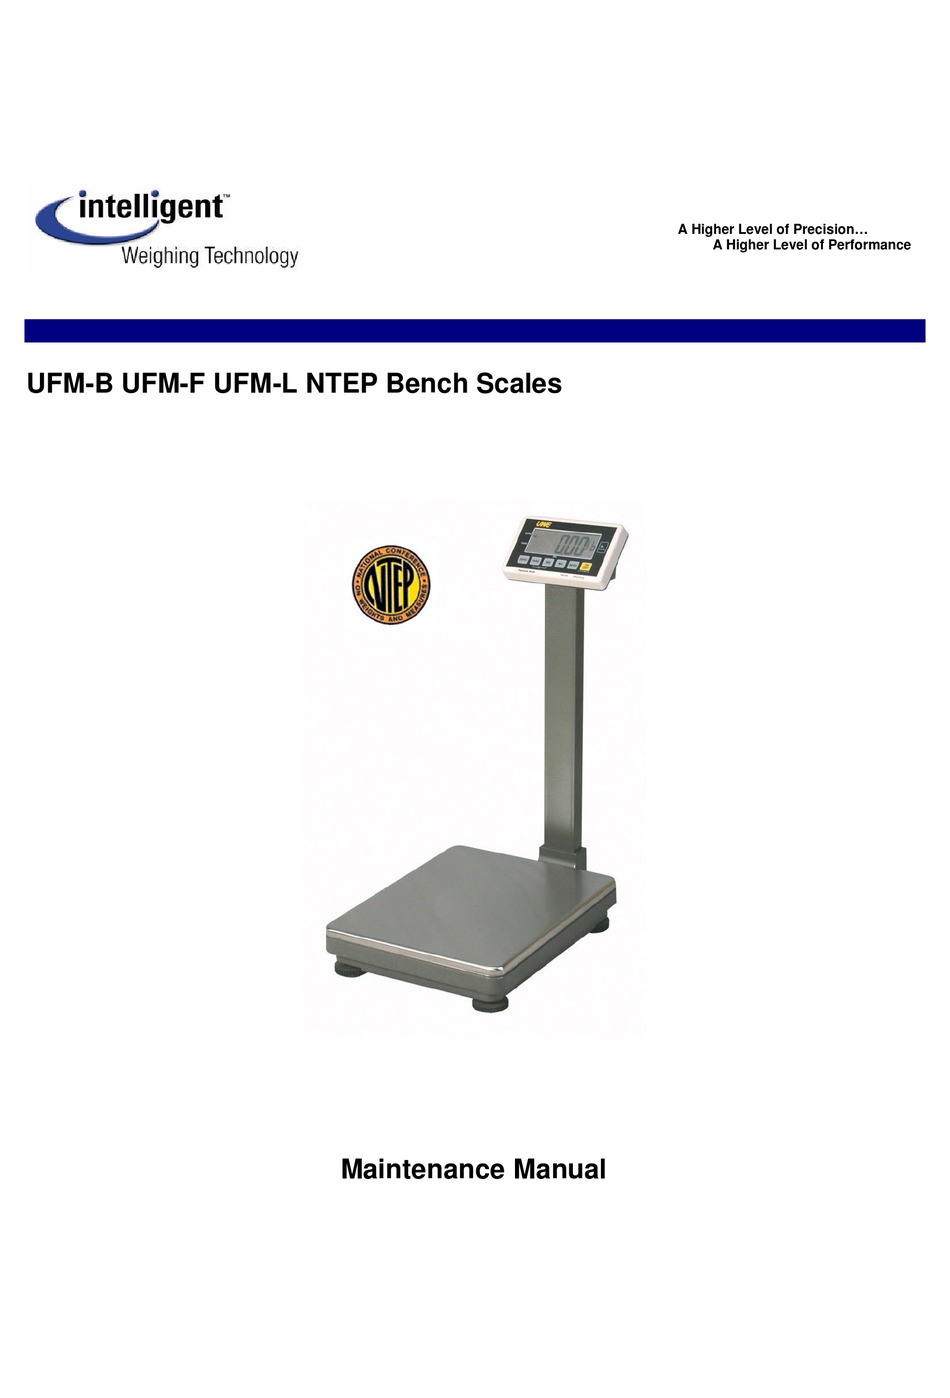 Intelligent Weighing UWE UFM-F Series Trade Legal Heavy Duty Platform Scale